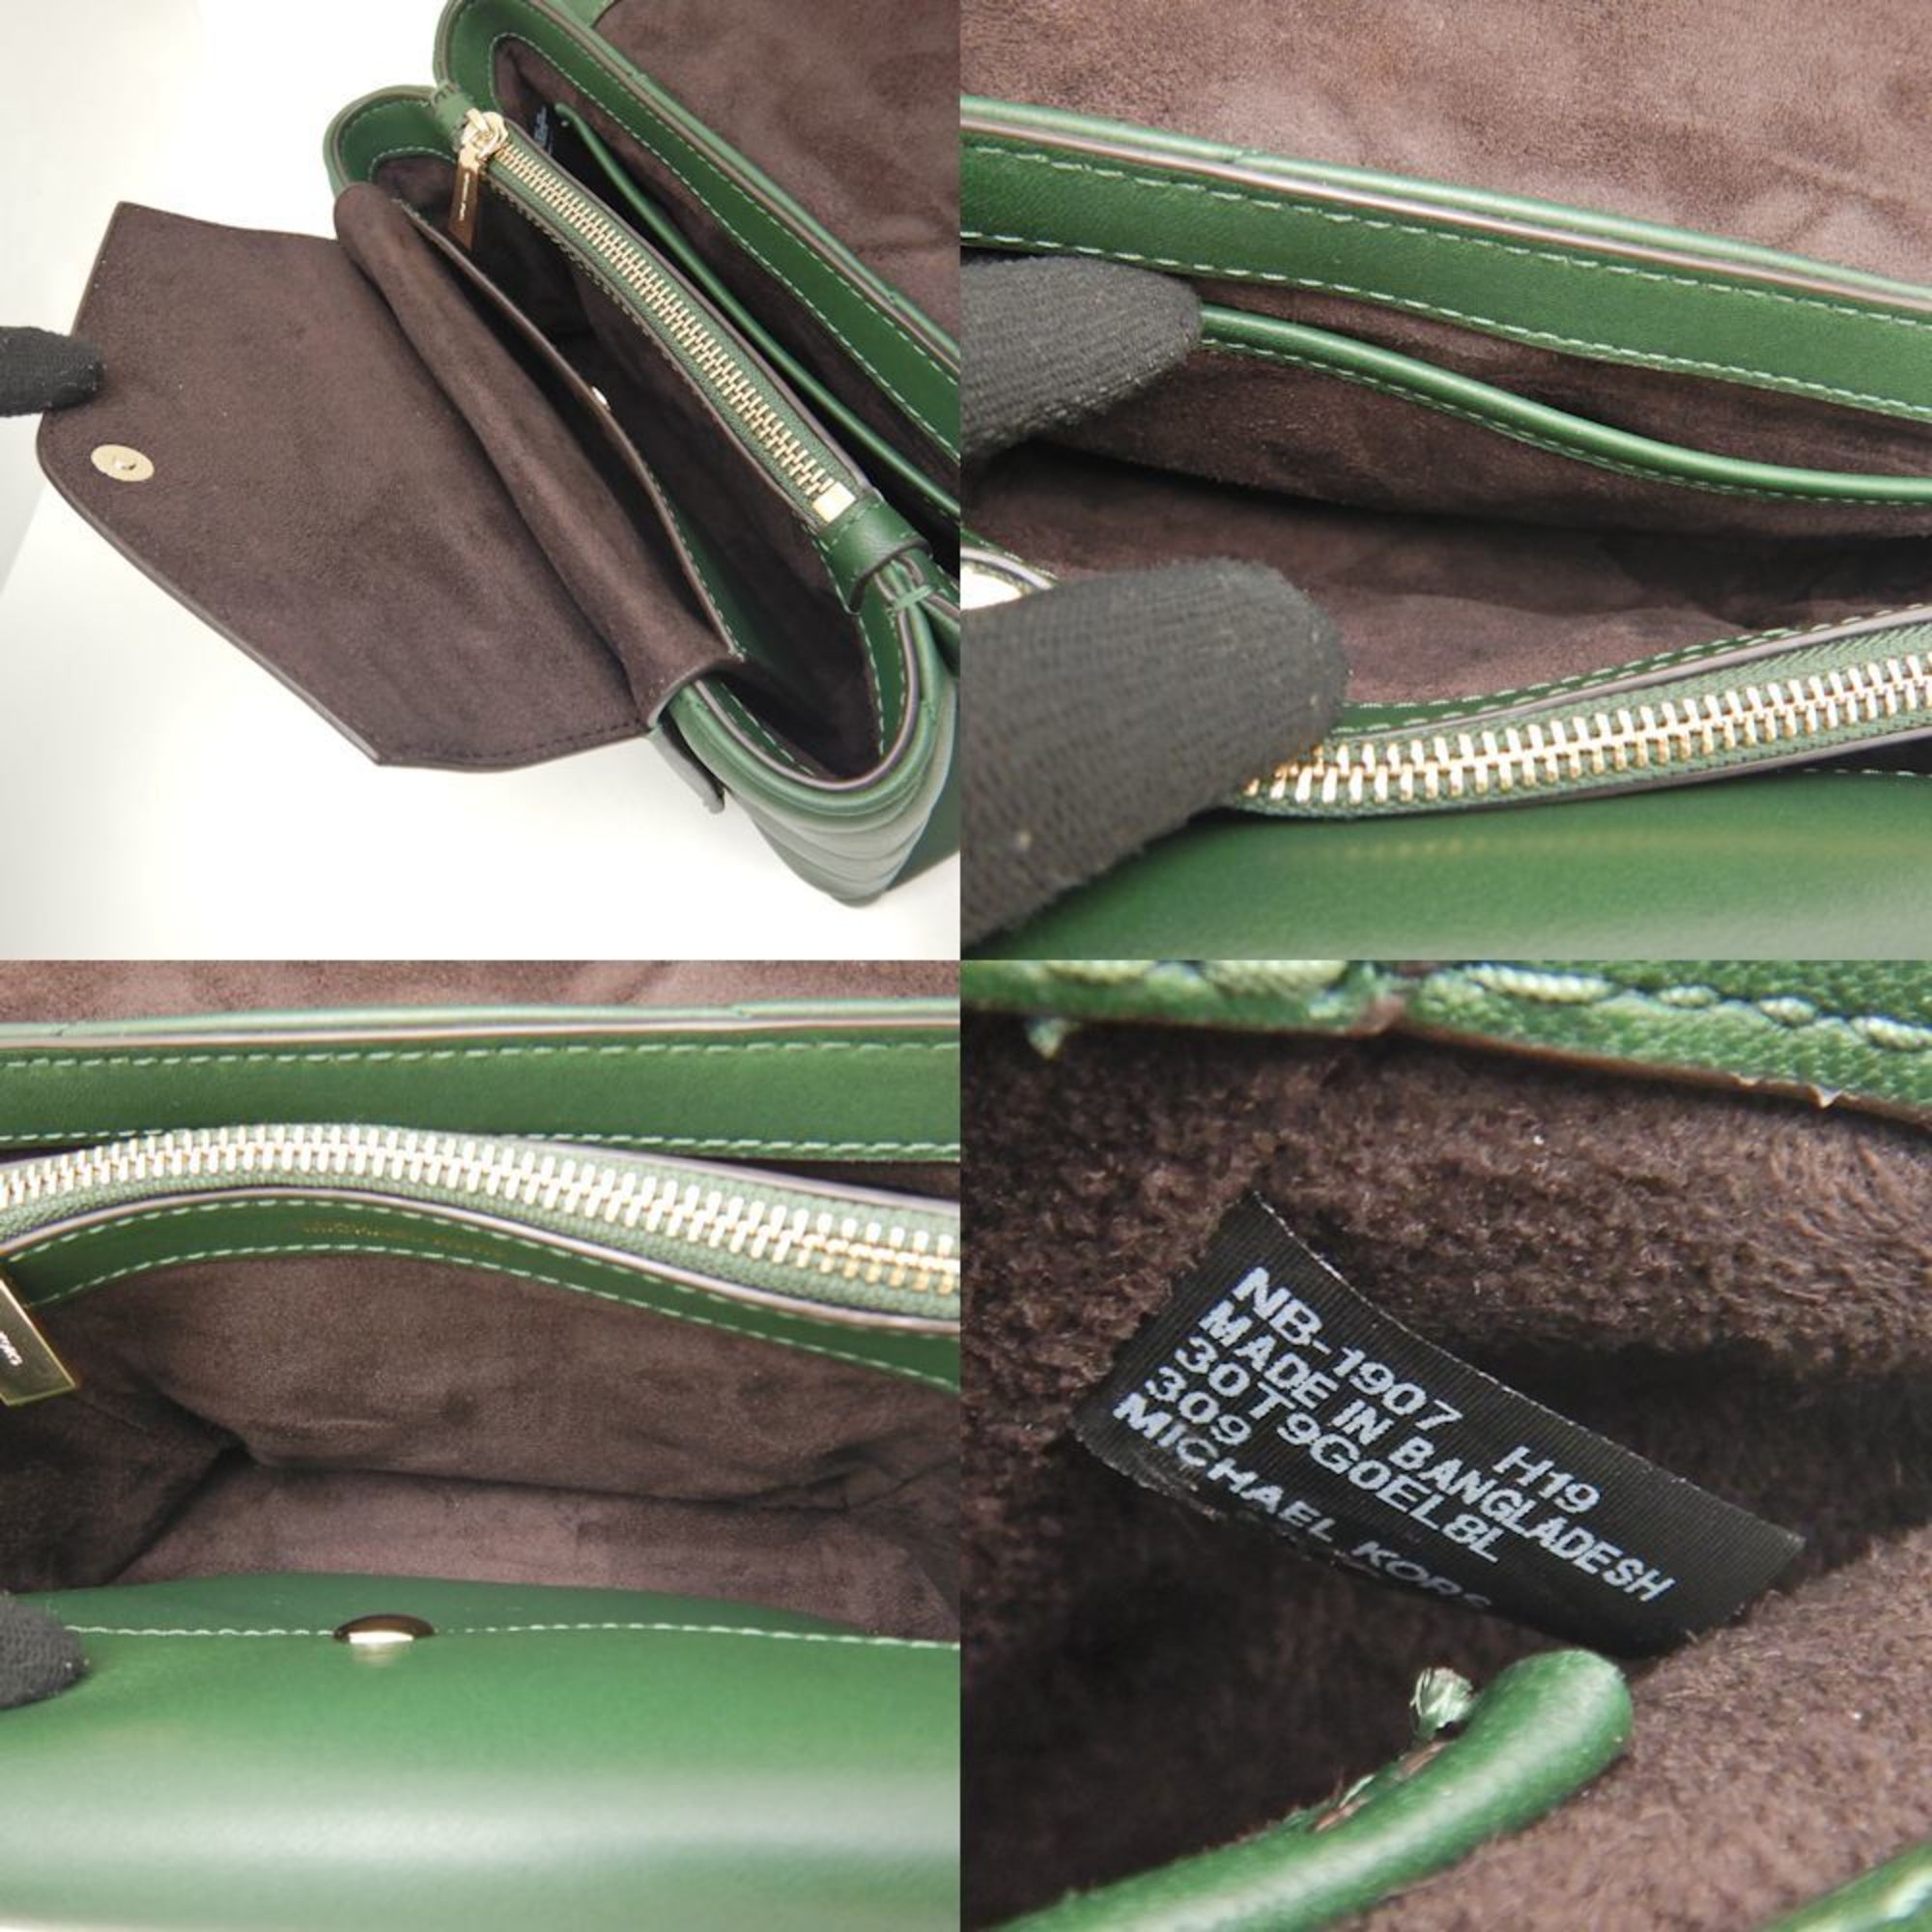 Michael Kors quilted chain shoulder bag 30T9G0EL8L leather green 251825